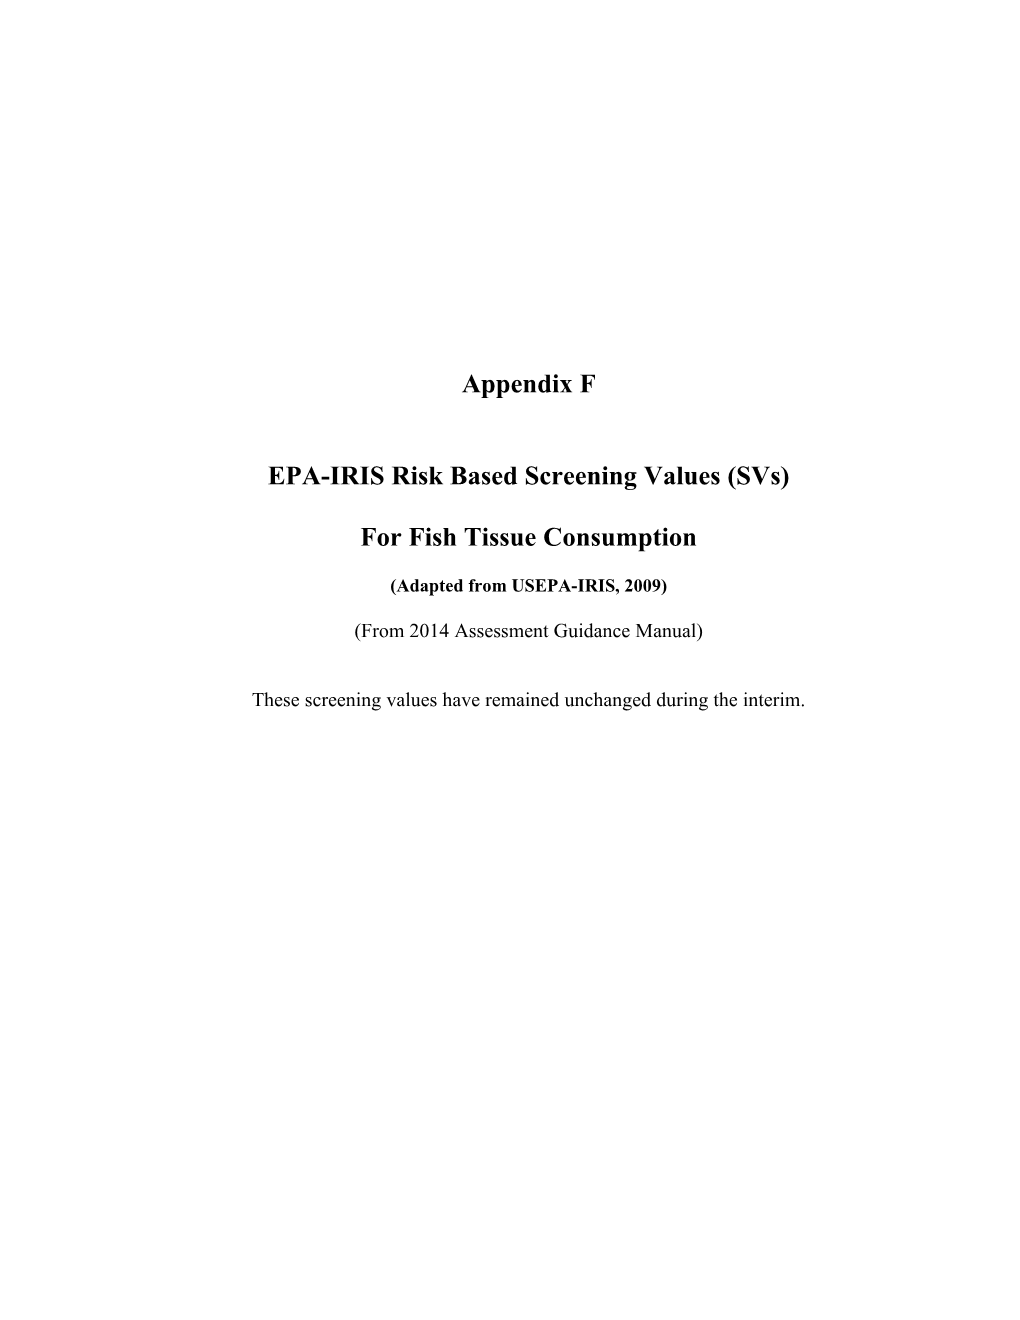 EPA-IRIS Risk Based Screening Values (Svs)